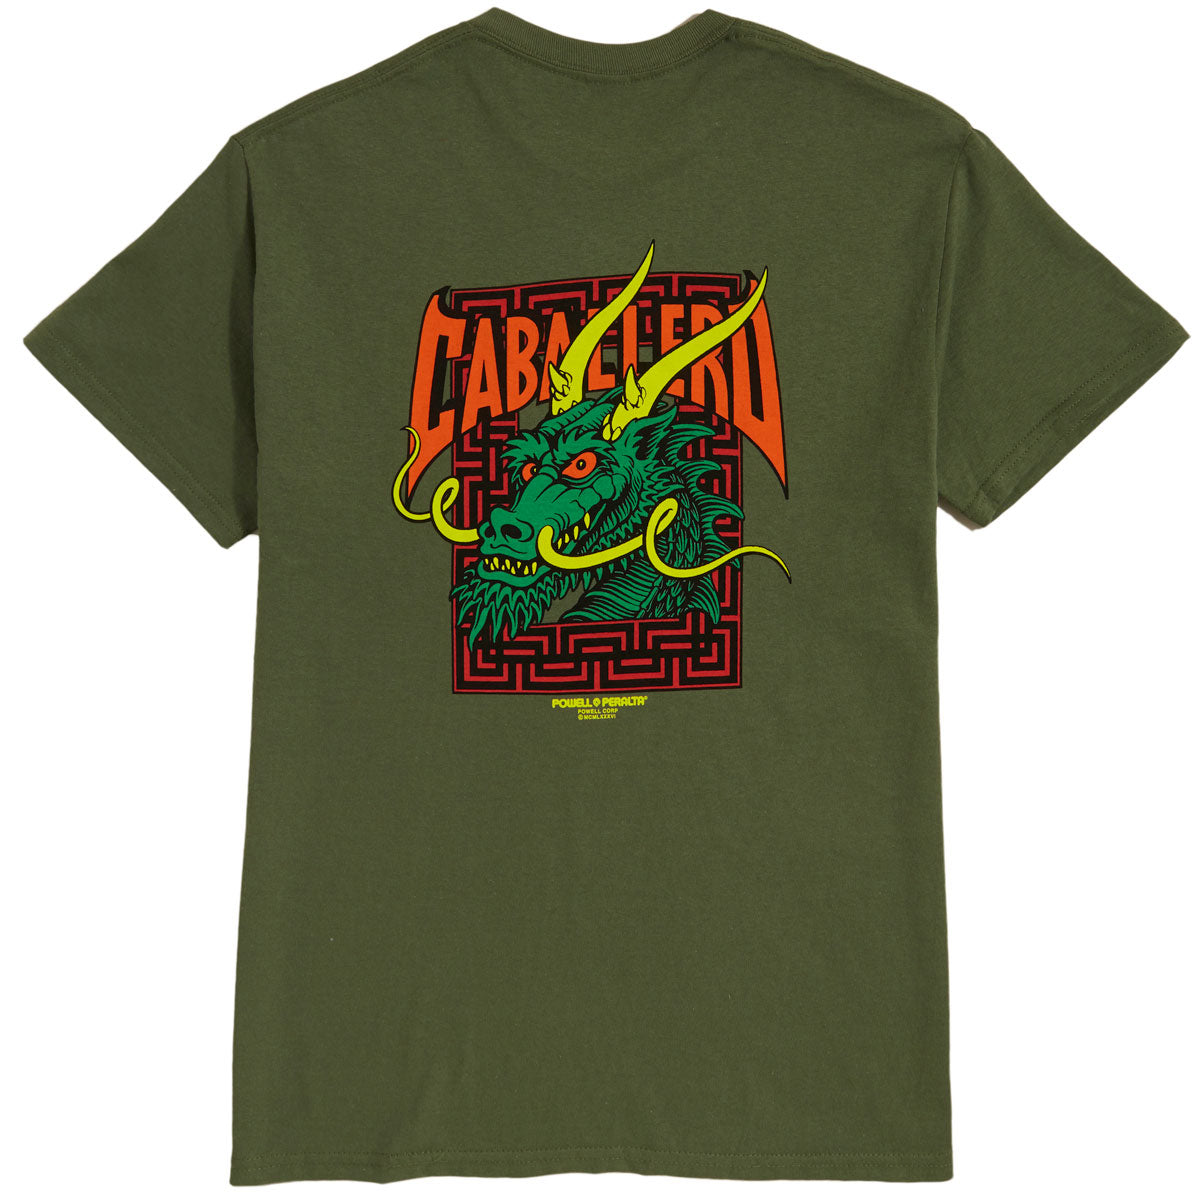 Powell-Peralta Caballero Street Dragon T-Shirt - Military Green image 1